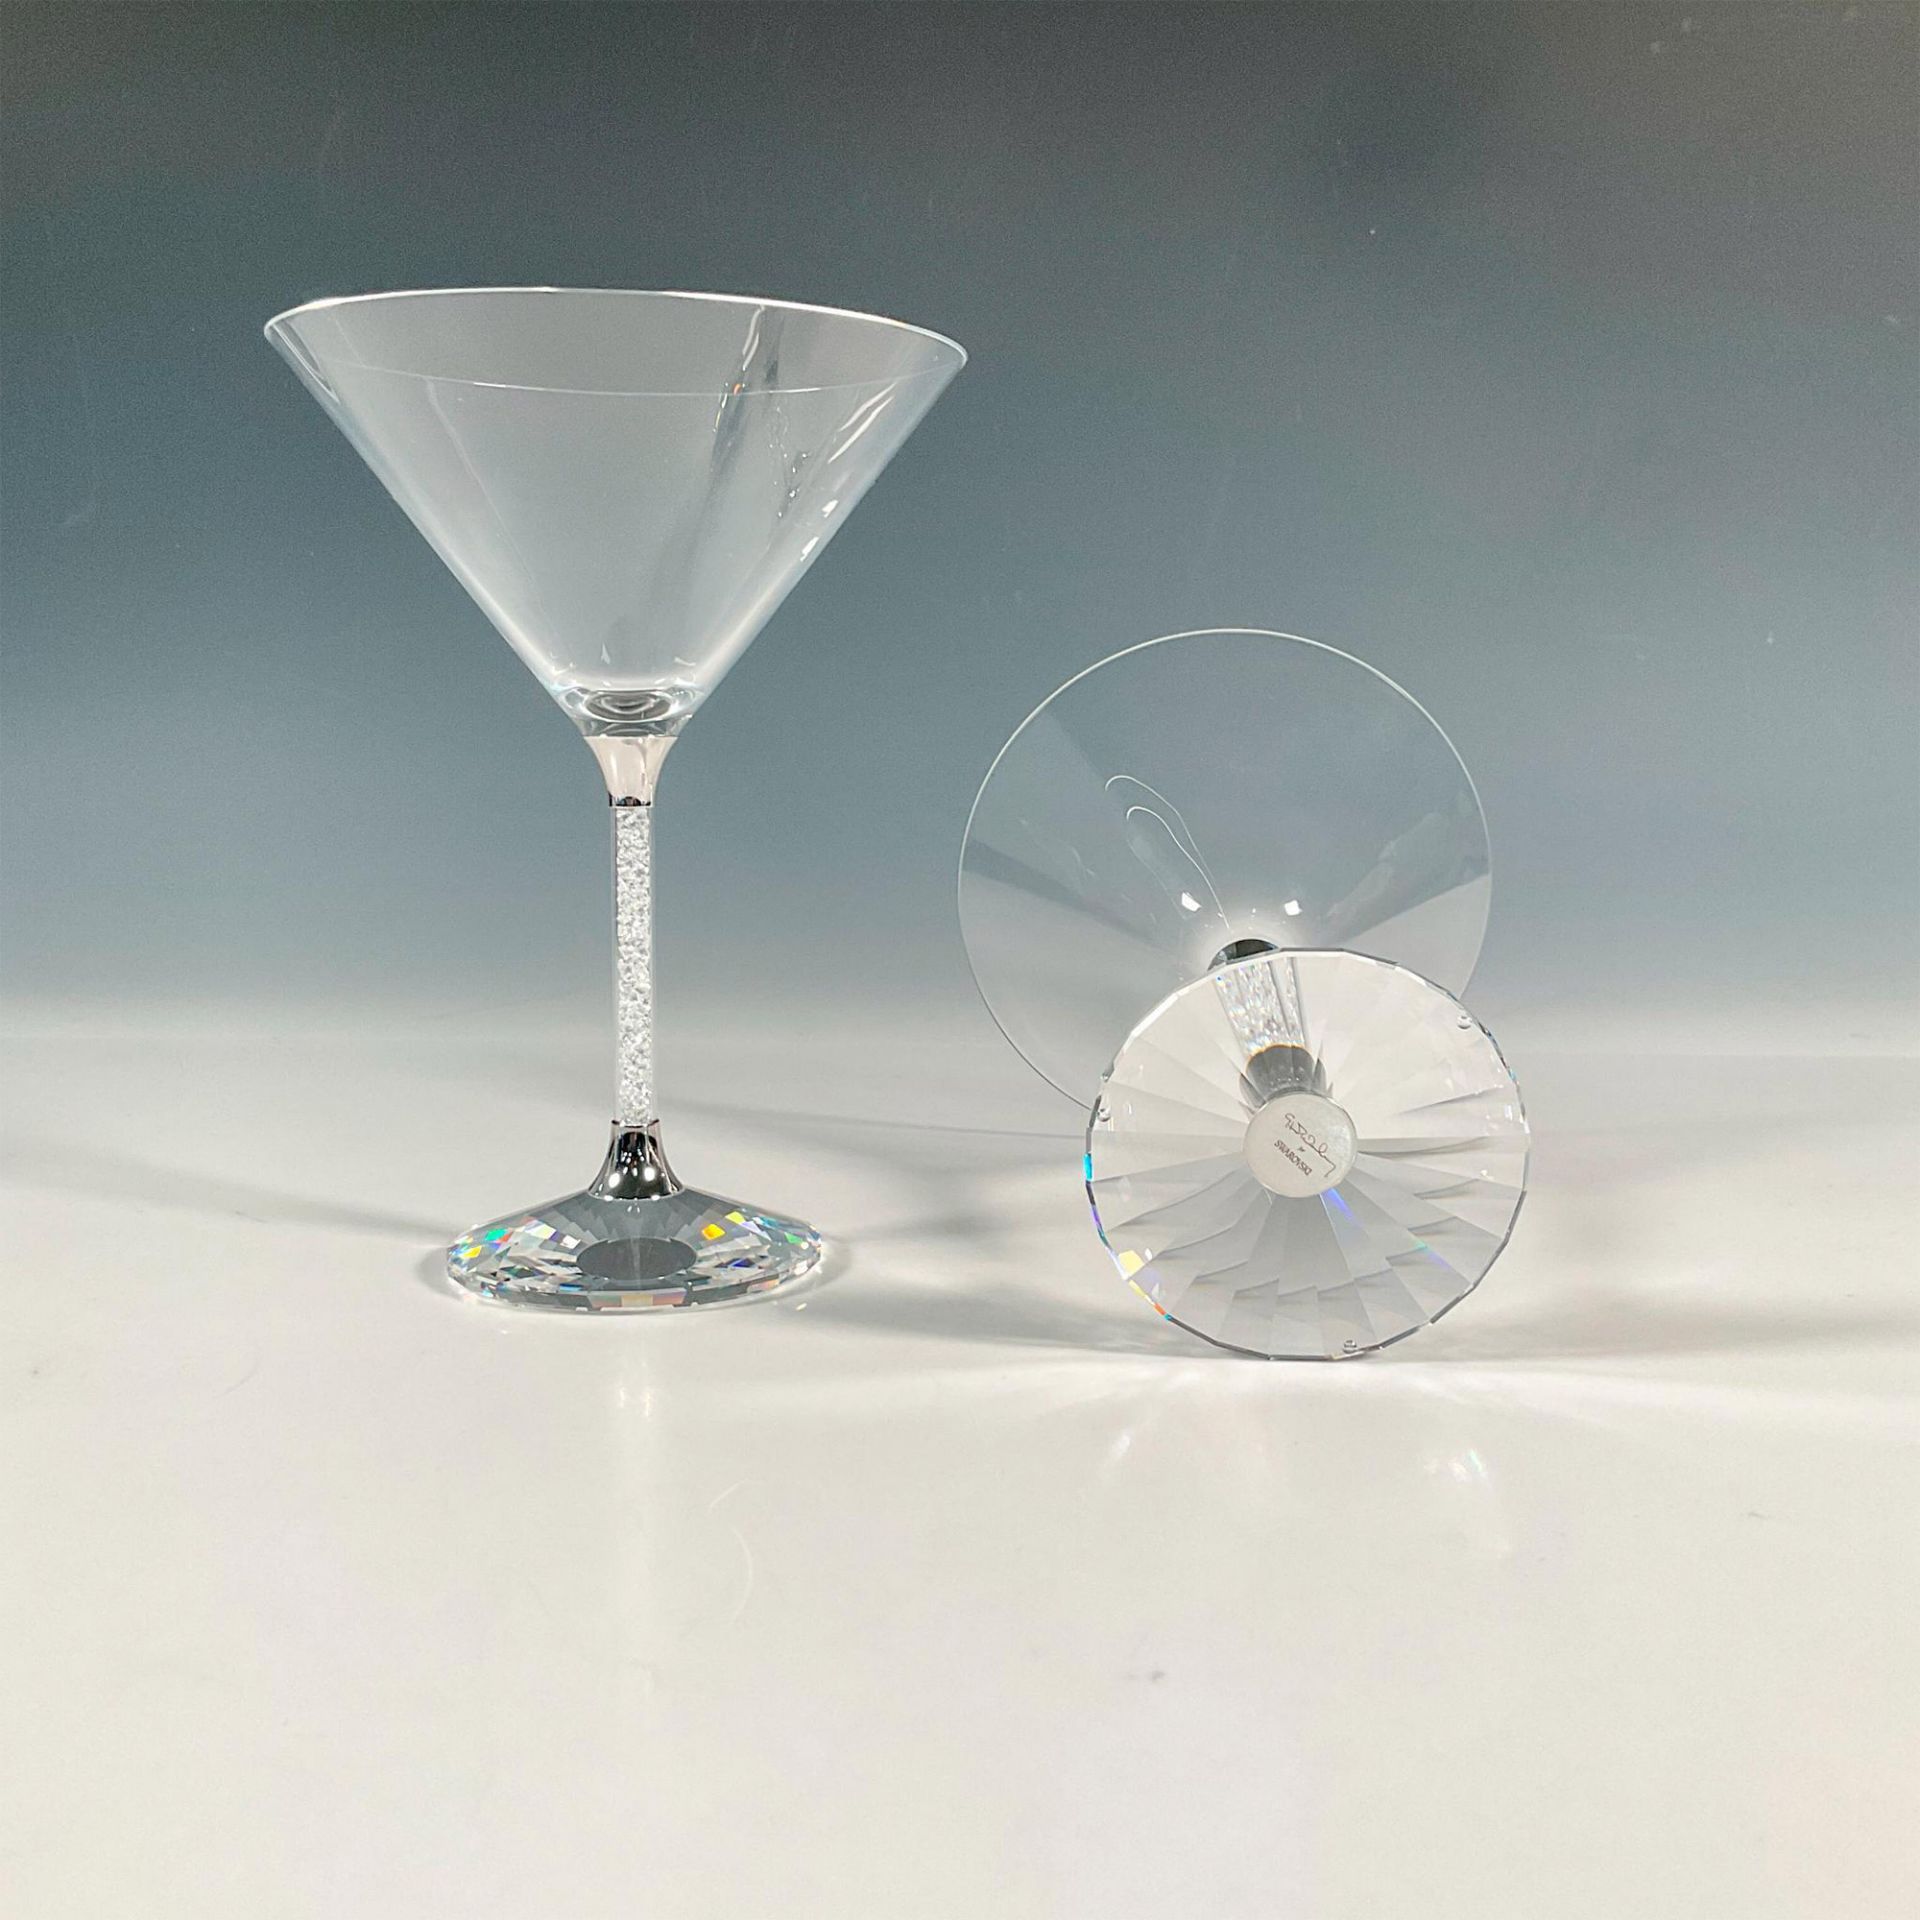 Pair of Swarovski Crystal Martini Glasses, Crystalline - Image 2 of 3